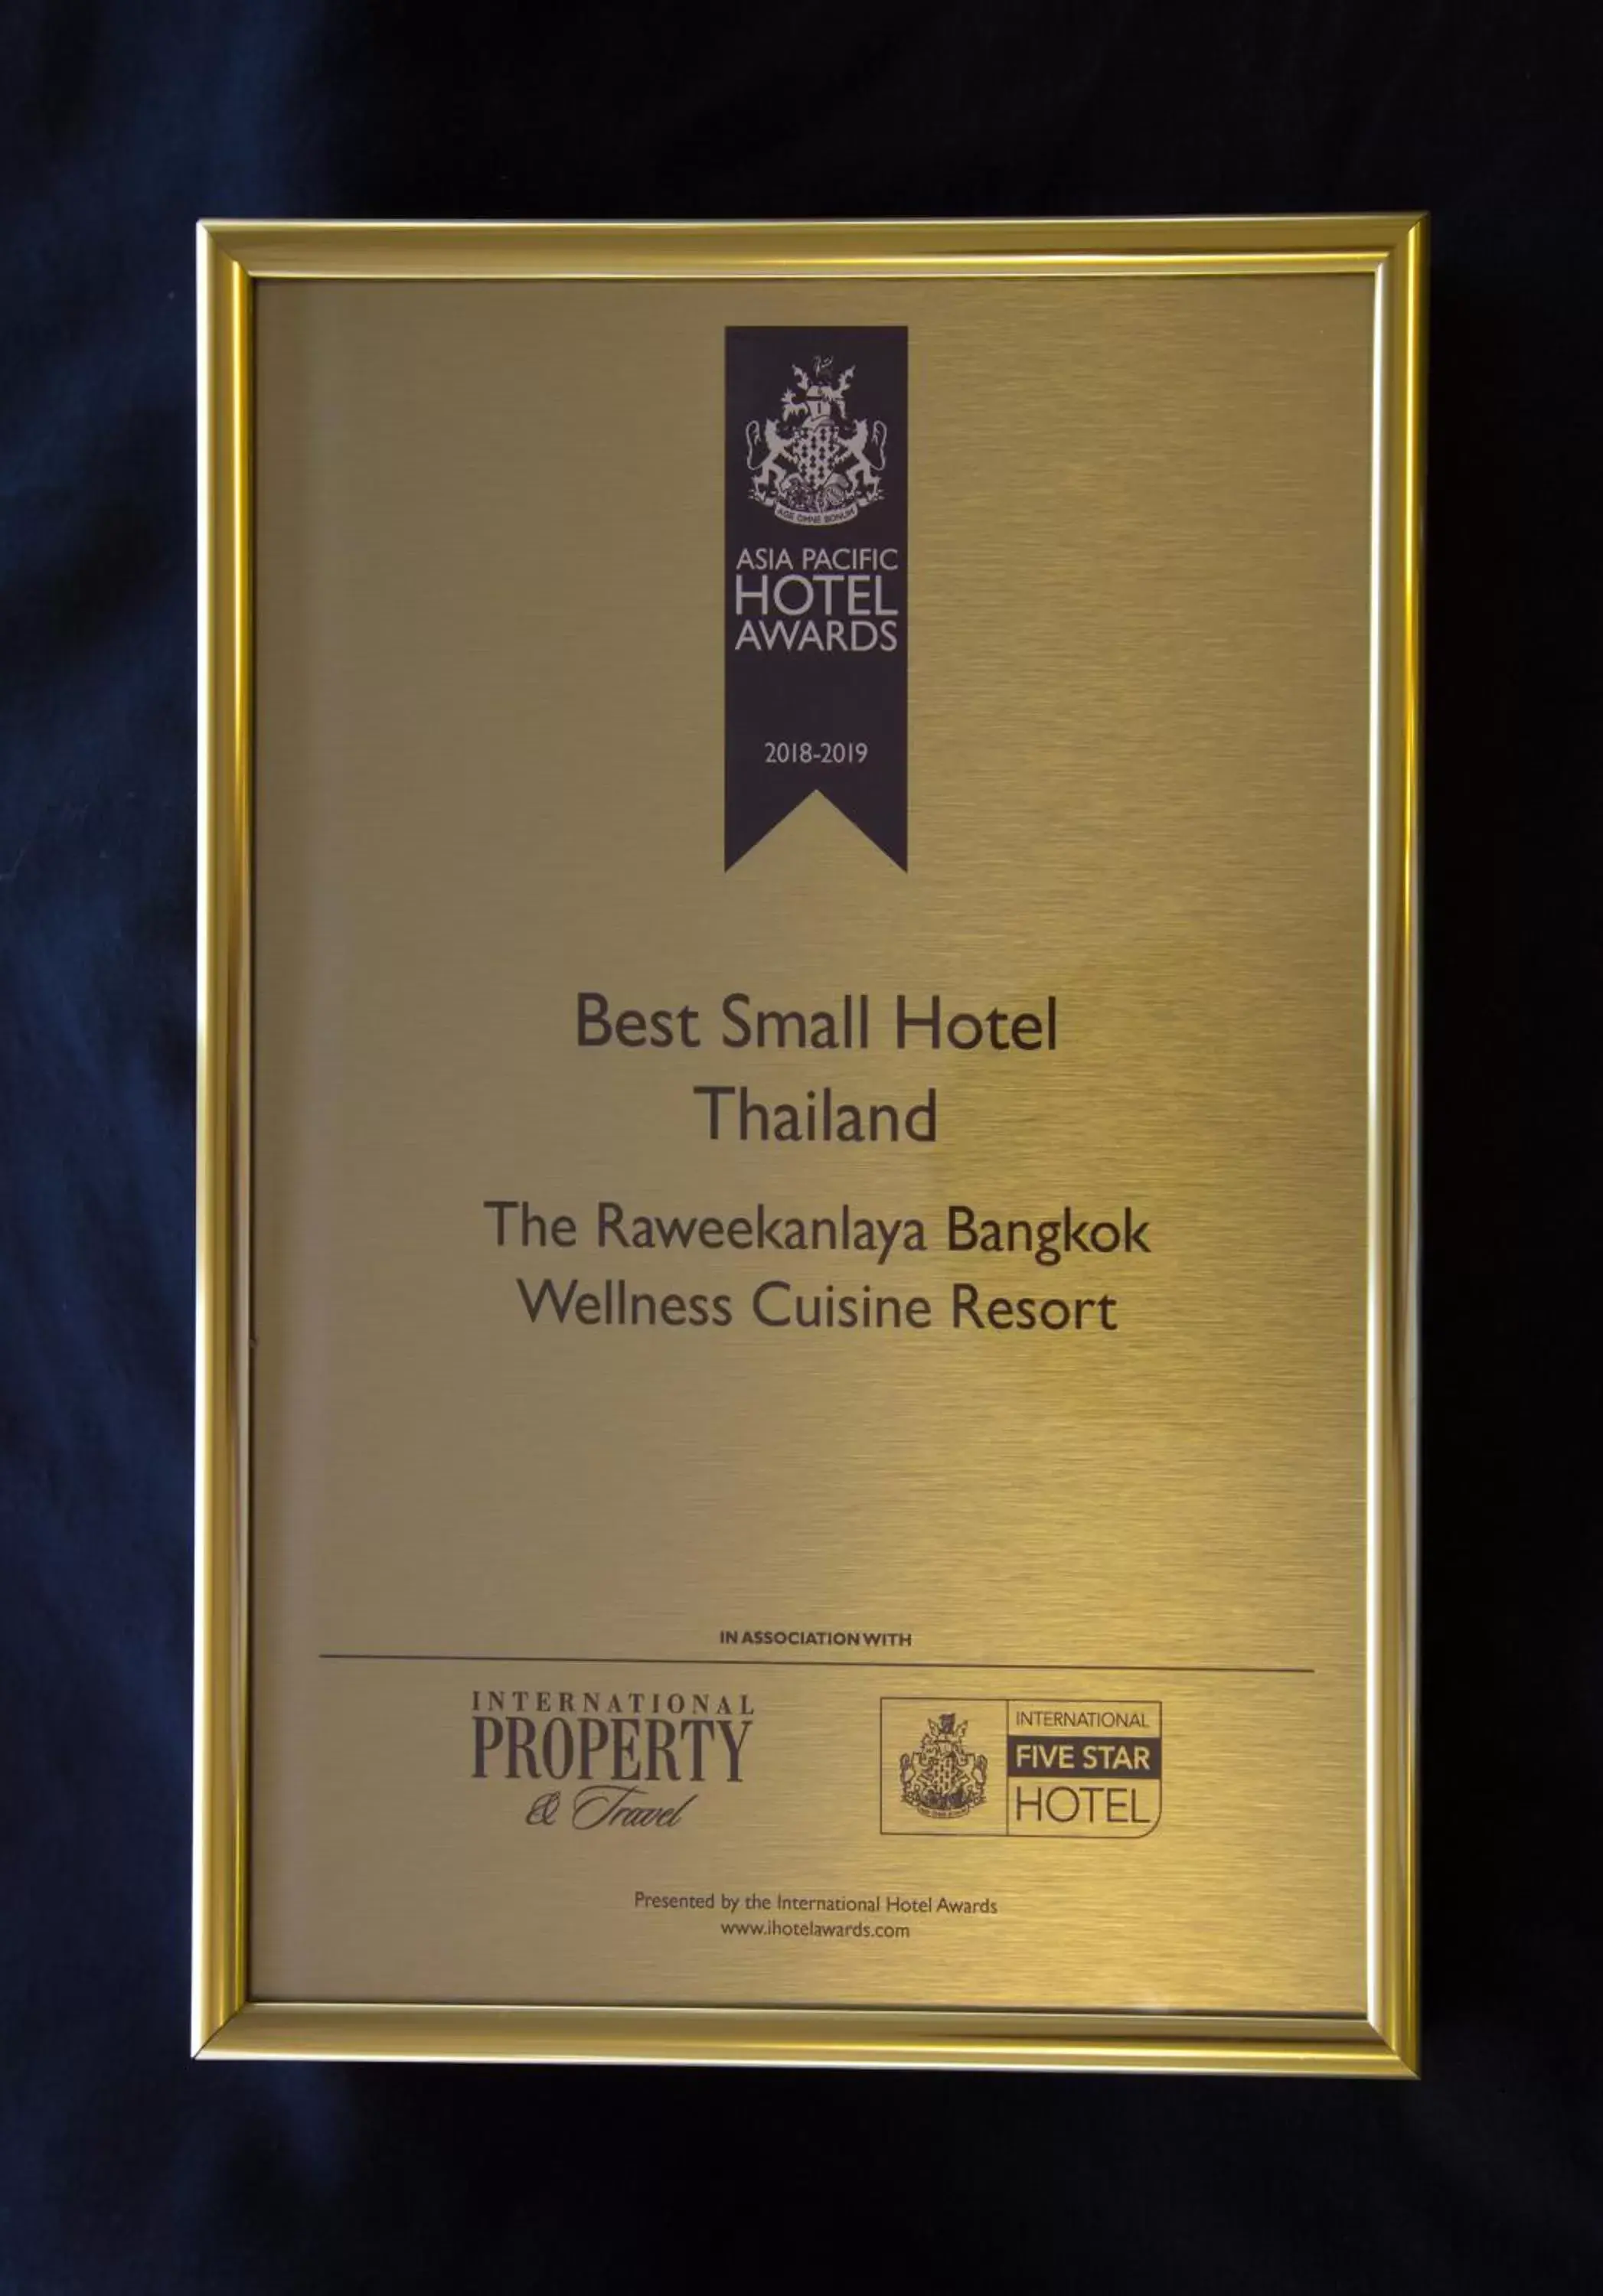 Certificate/Award in The Raweekanlaya Bangkok